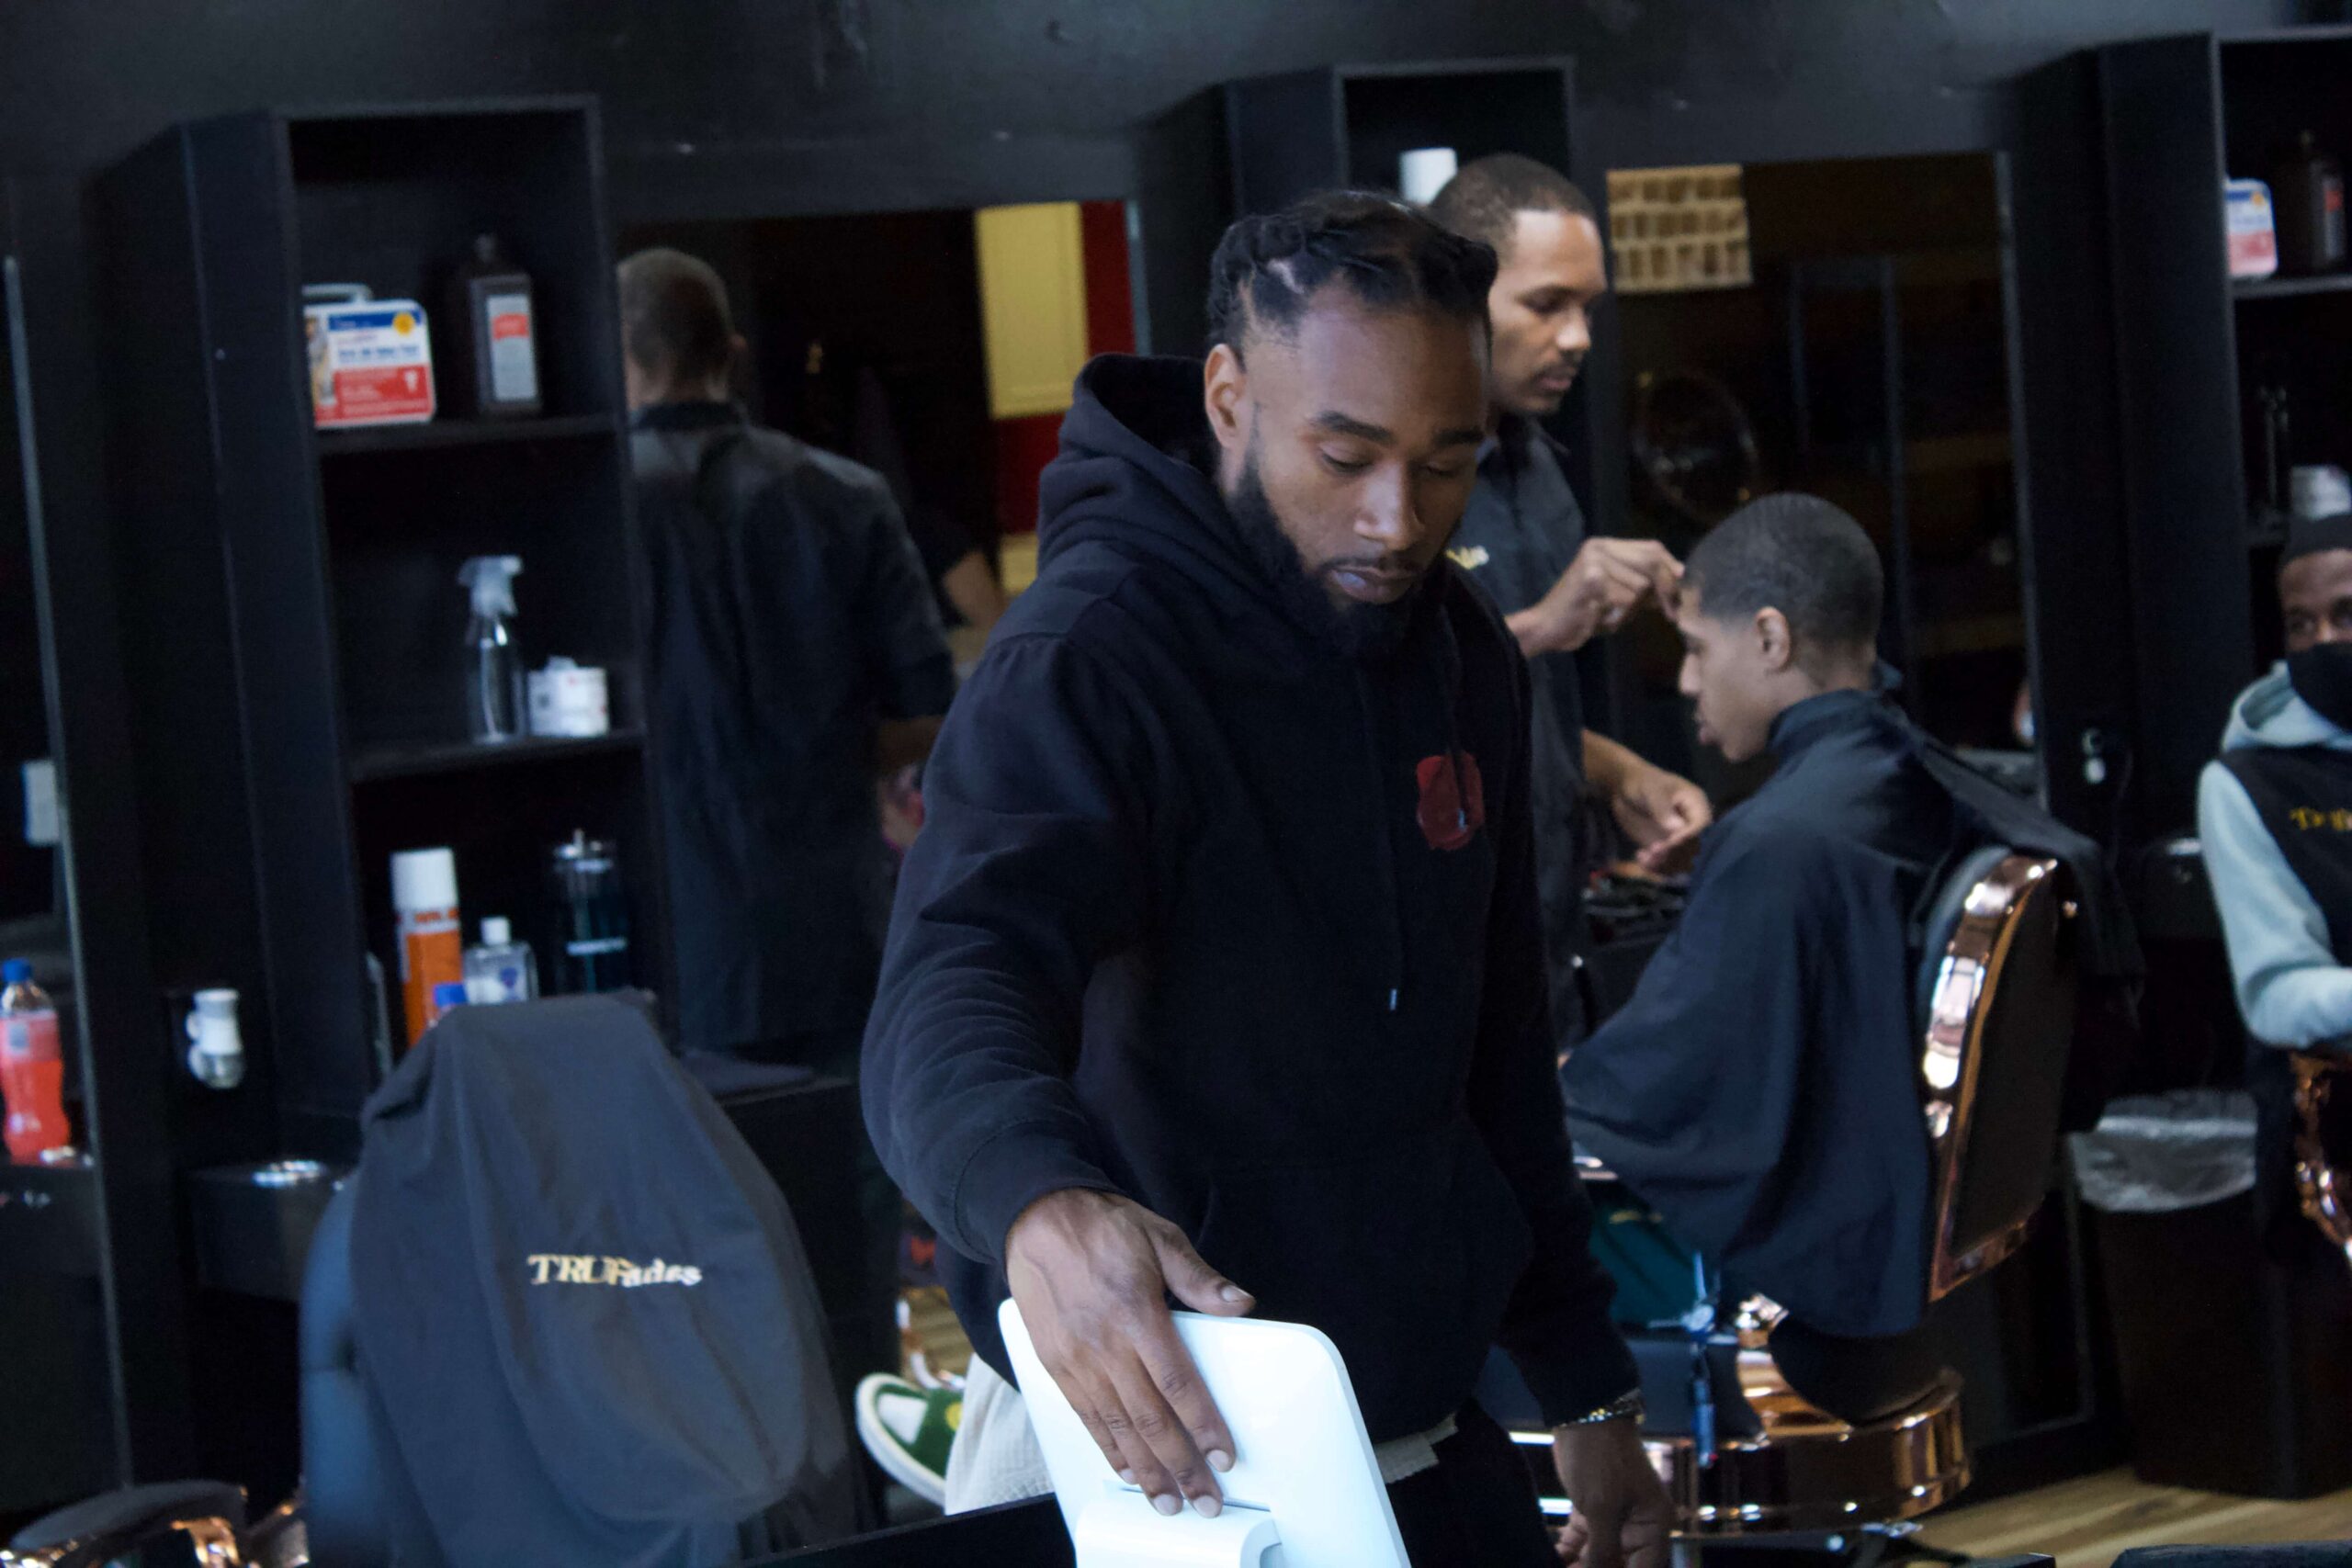 TruFades Barbershop in Richmond, VA